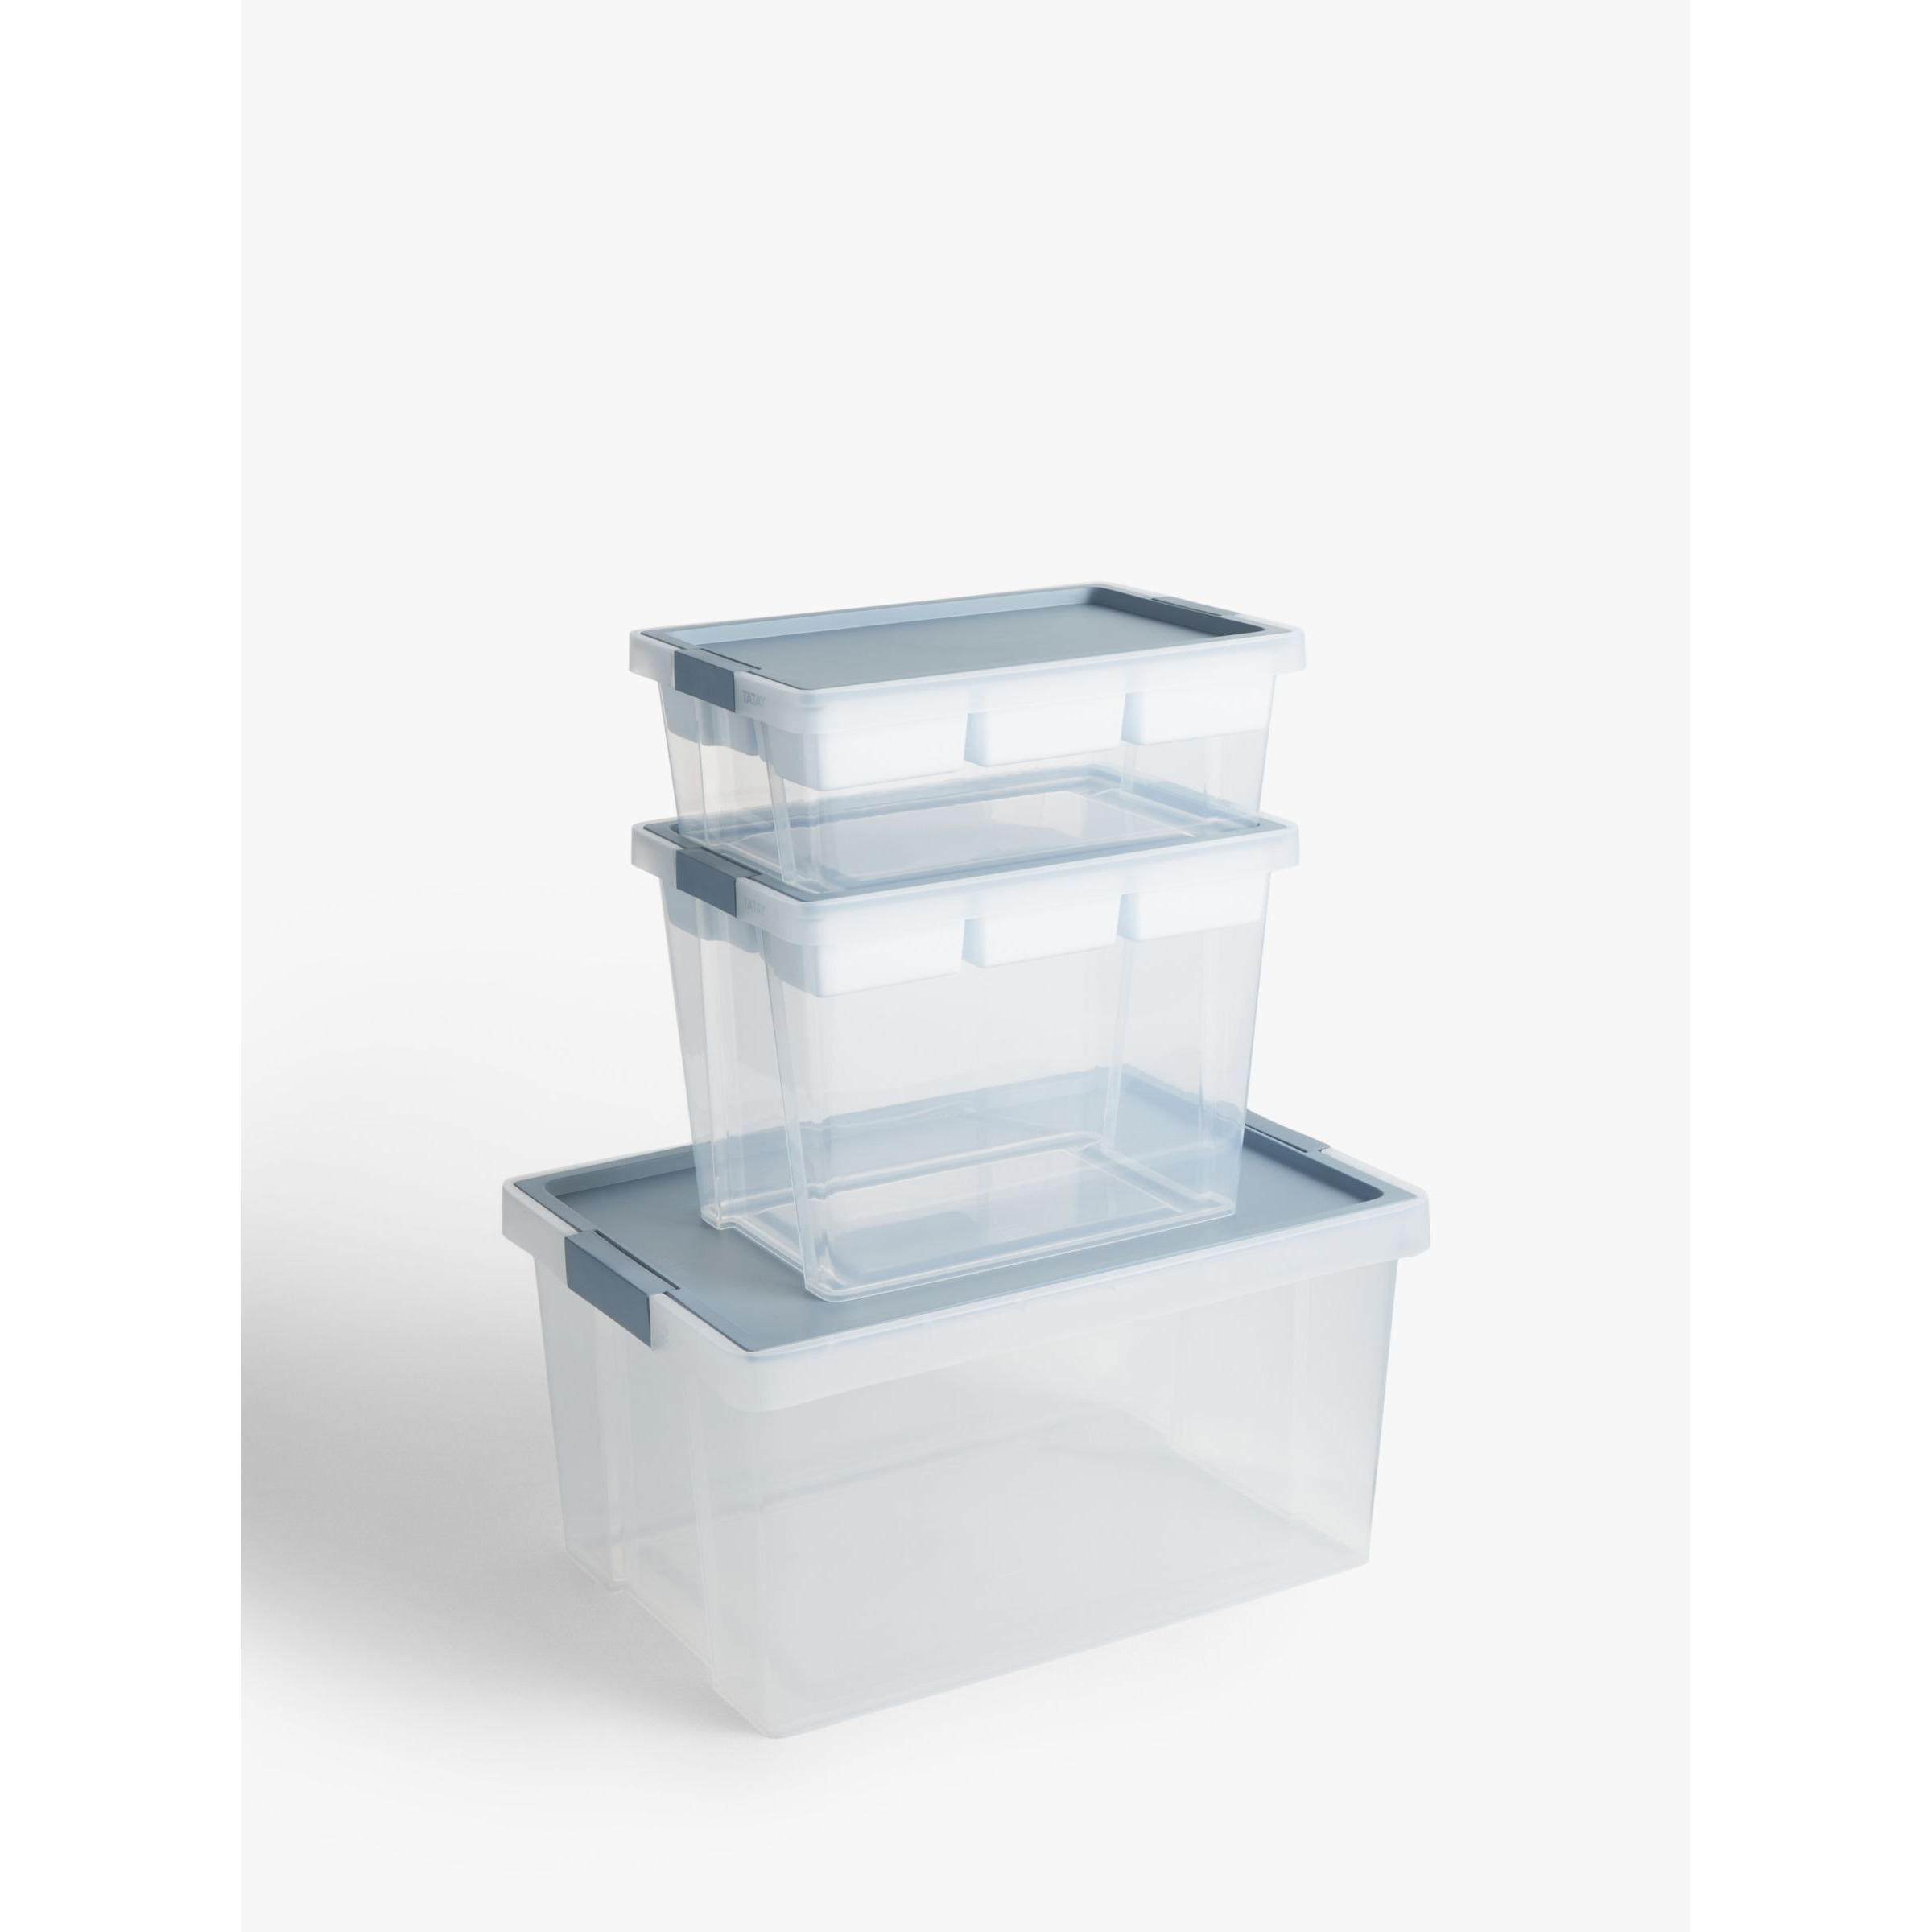 TATAY Hinge Lid Storage Boxes and Organisers, Light Blue, Set of 5 - image 1